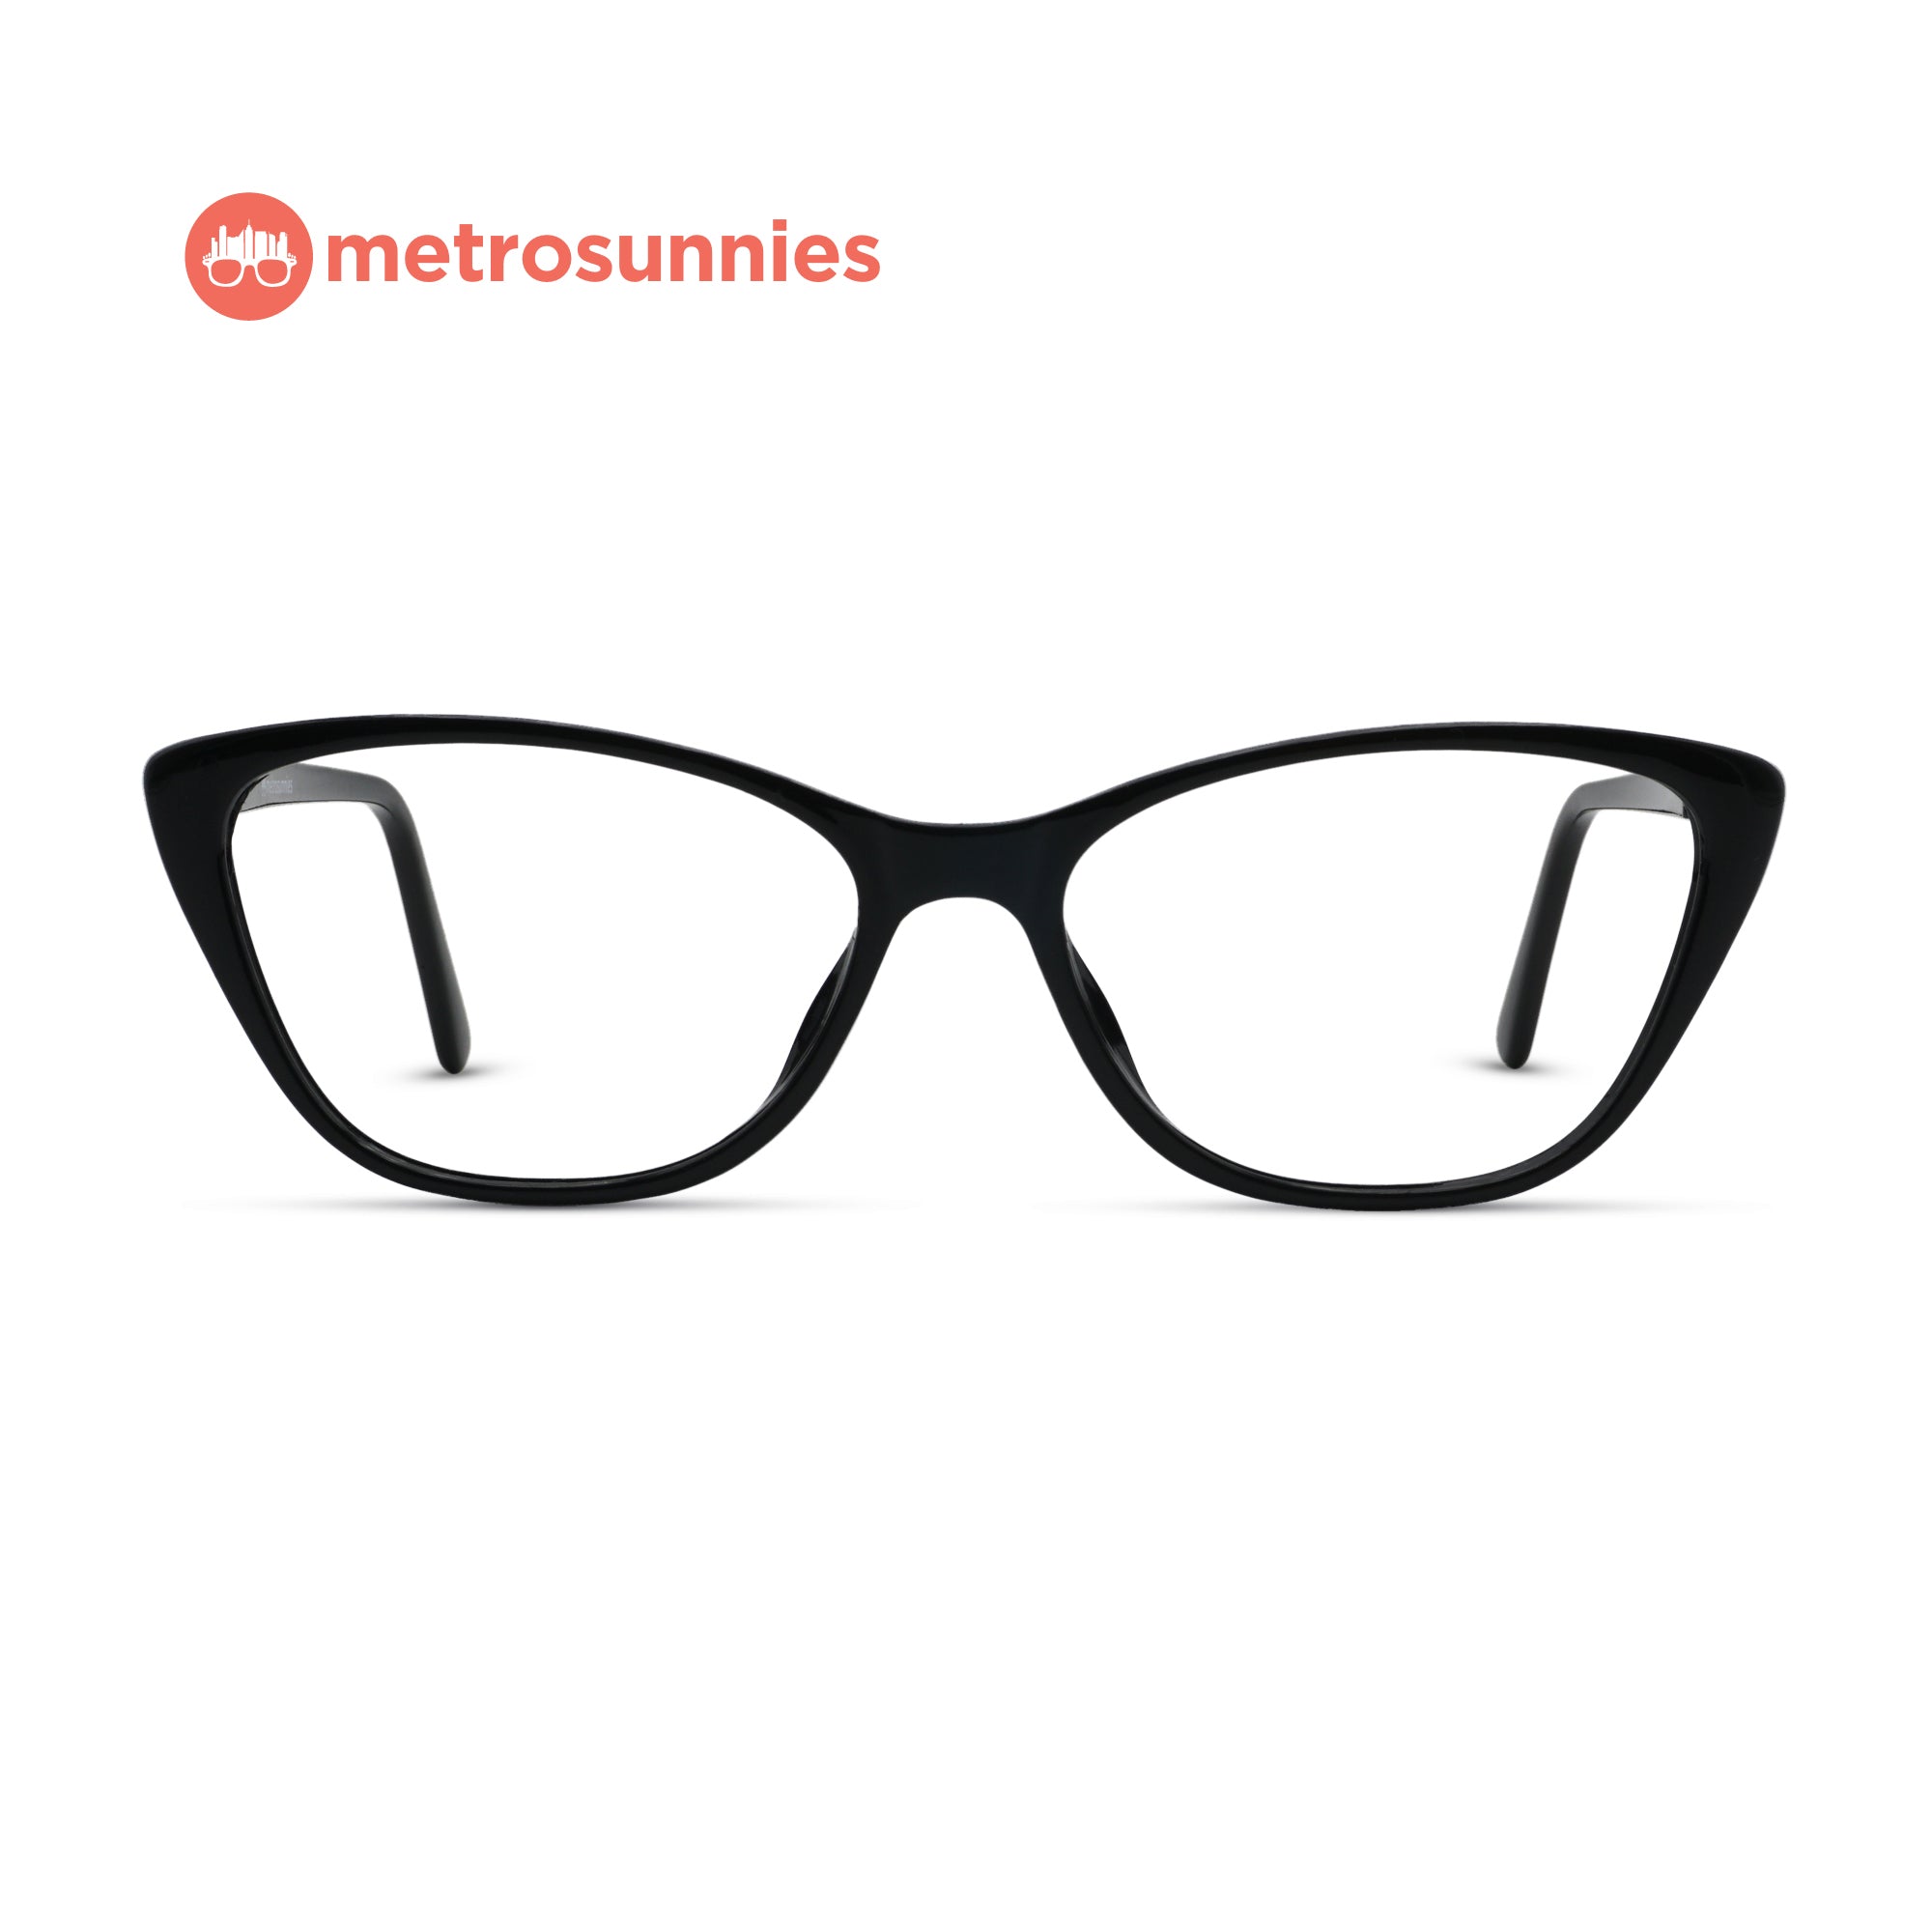 MetroSunnies Avery Specs (Black) / Replaceable Lens / Eyeglasses for Men and Women